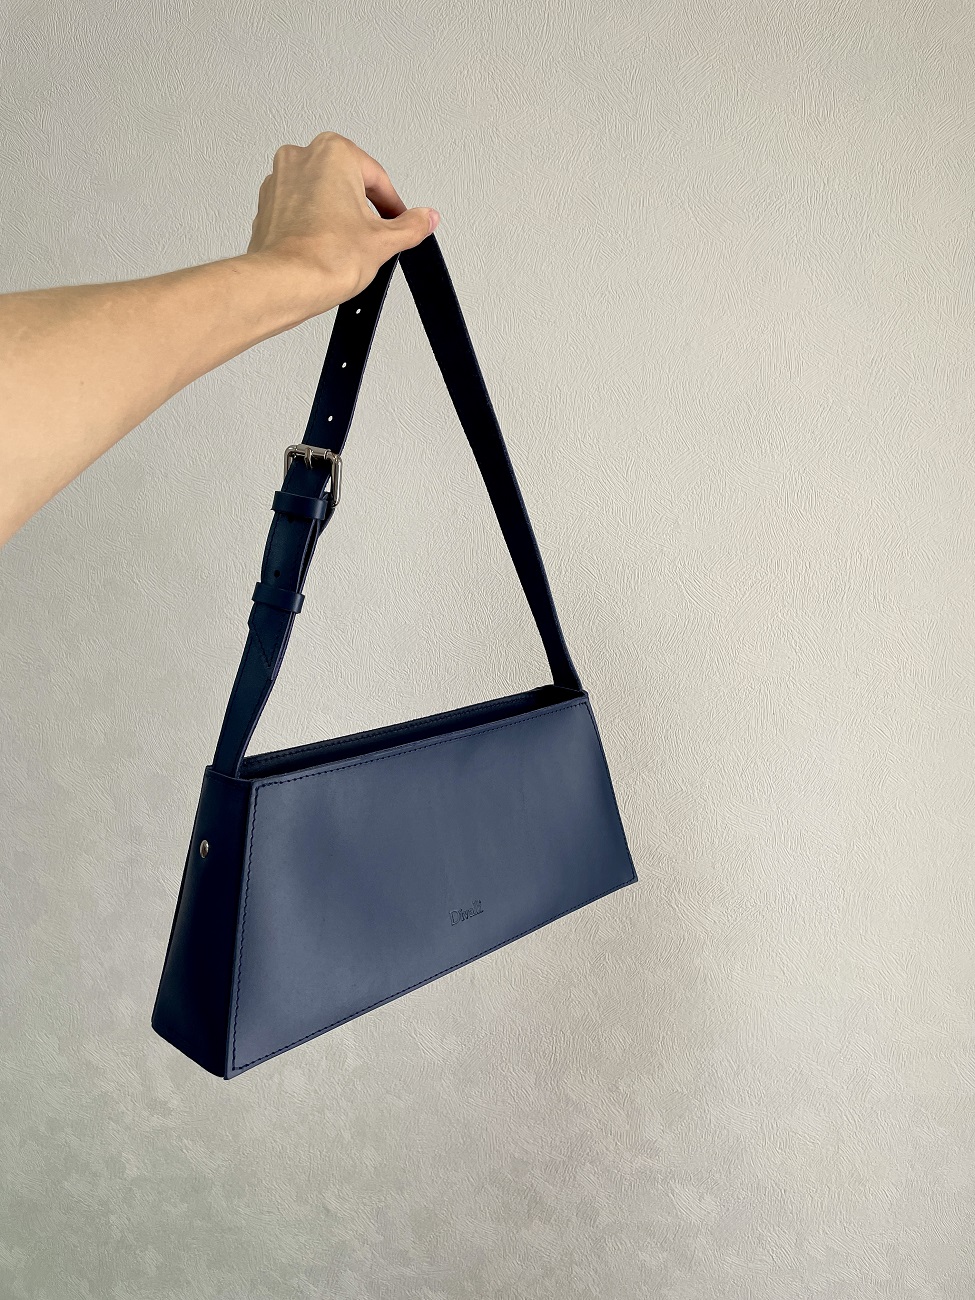 Женская кожаная сумка-багет синяя A036 sapphire